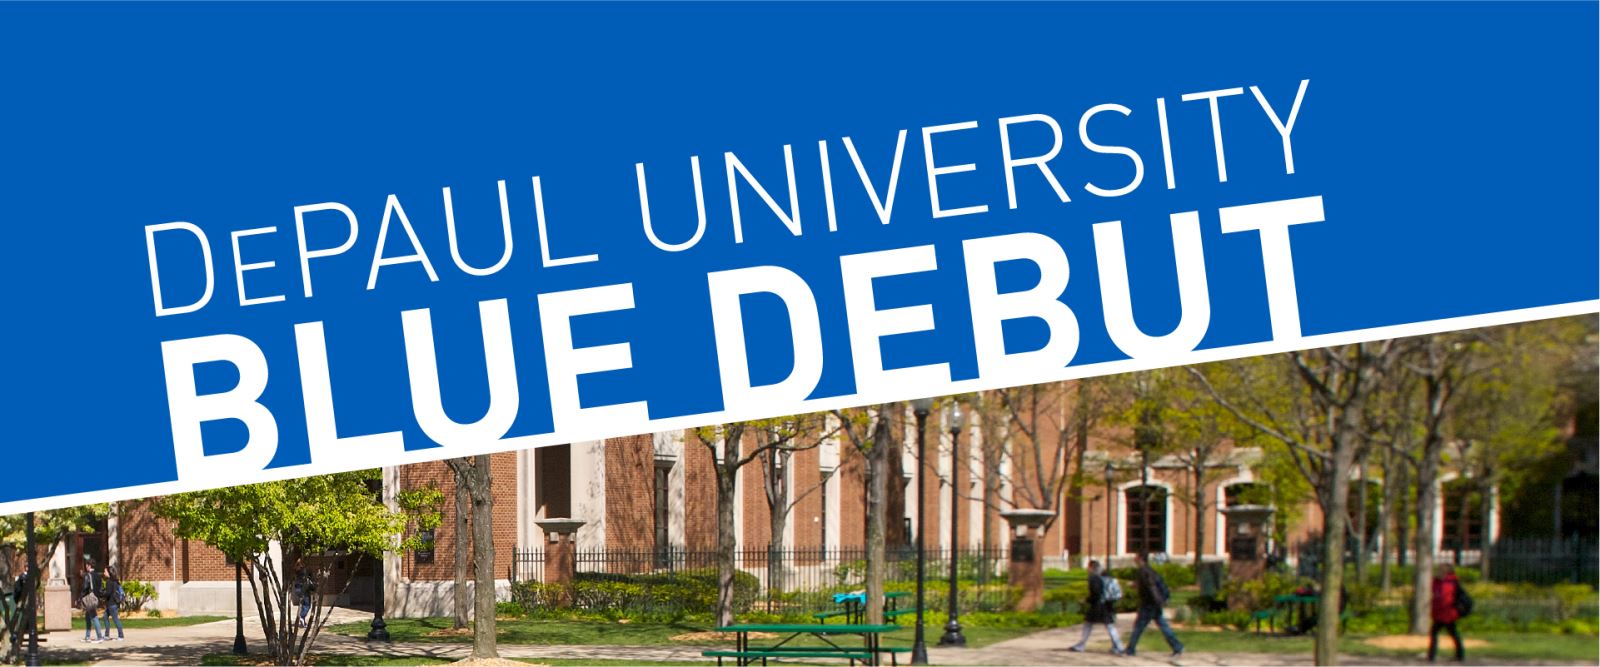 DePaul University Blue Debut